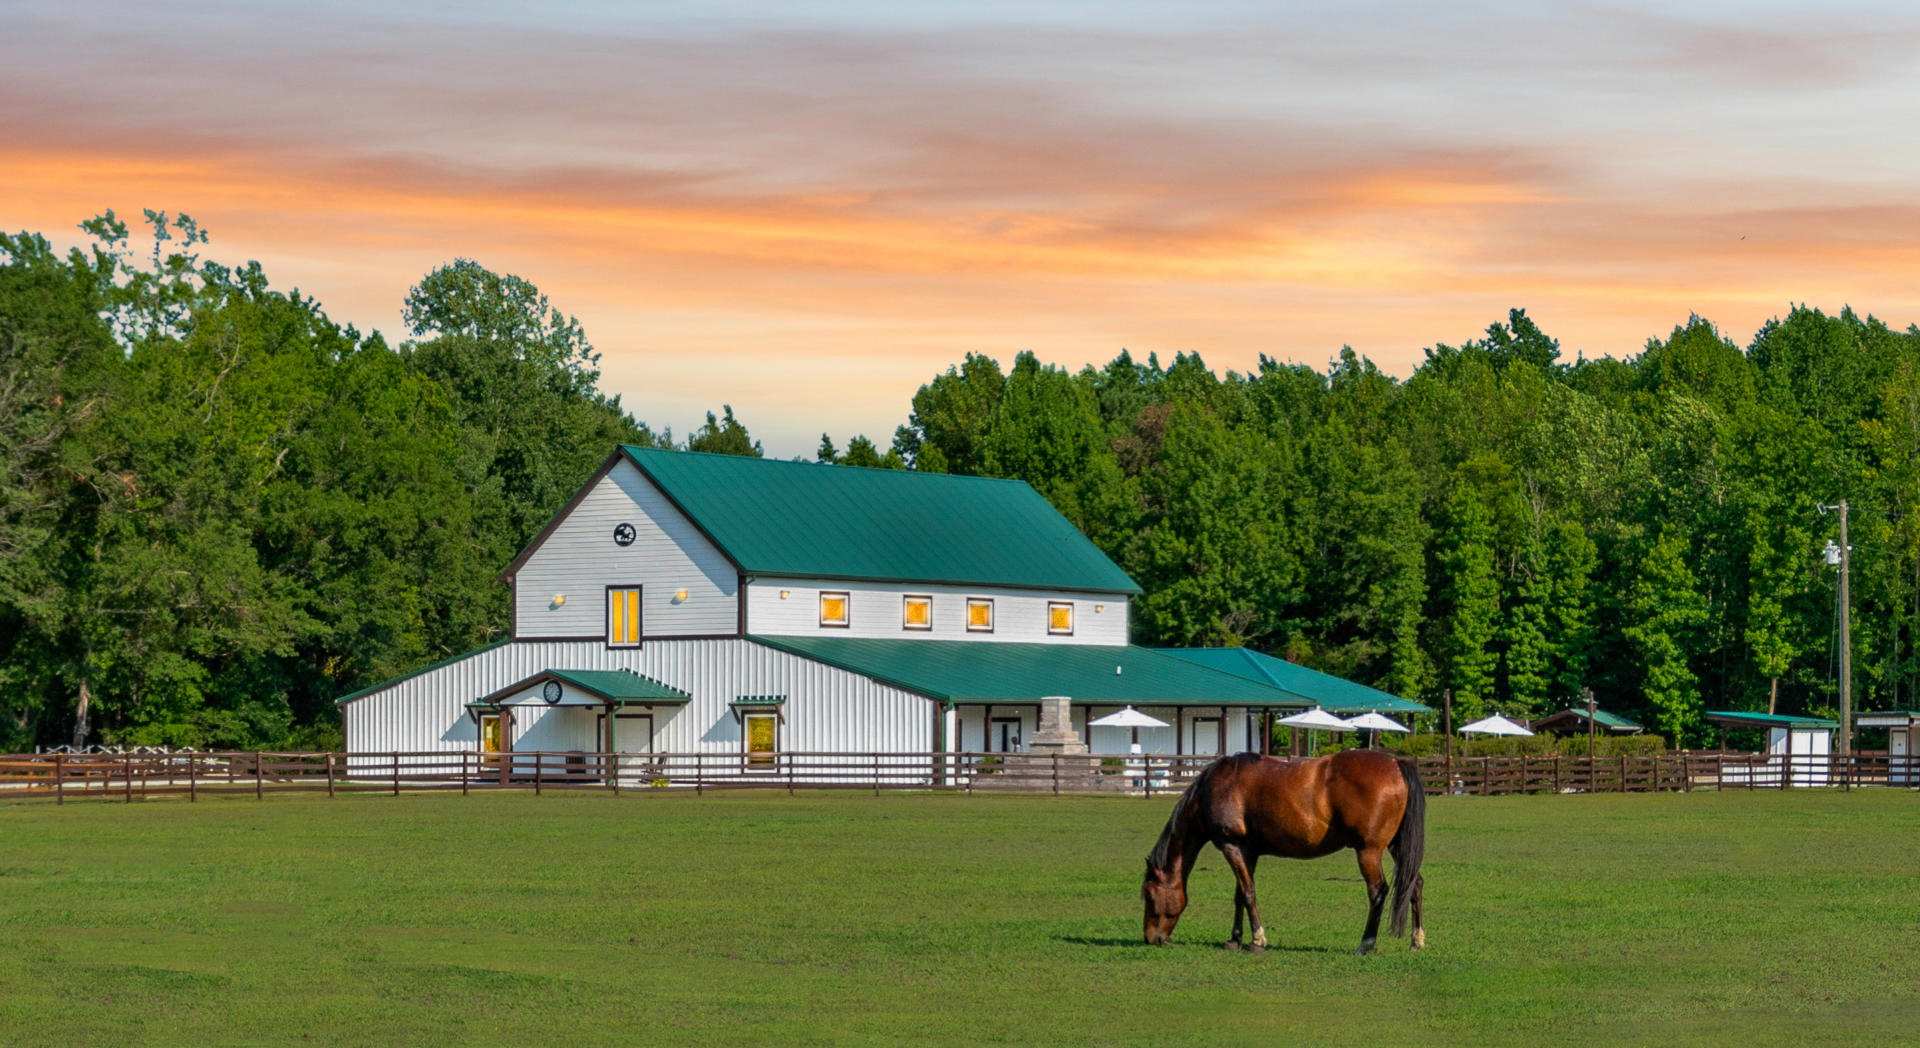 The English Country Barn of the Carolina's